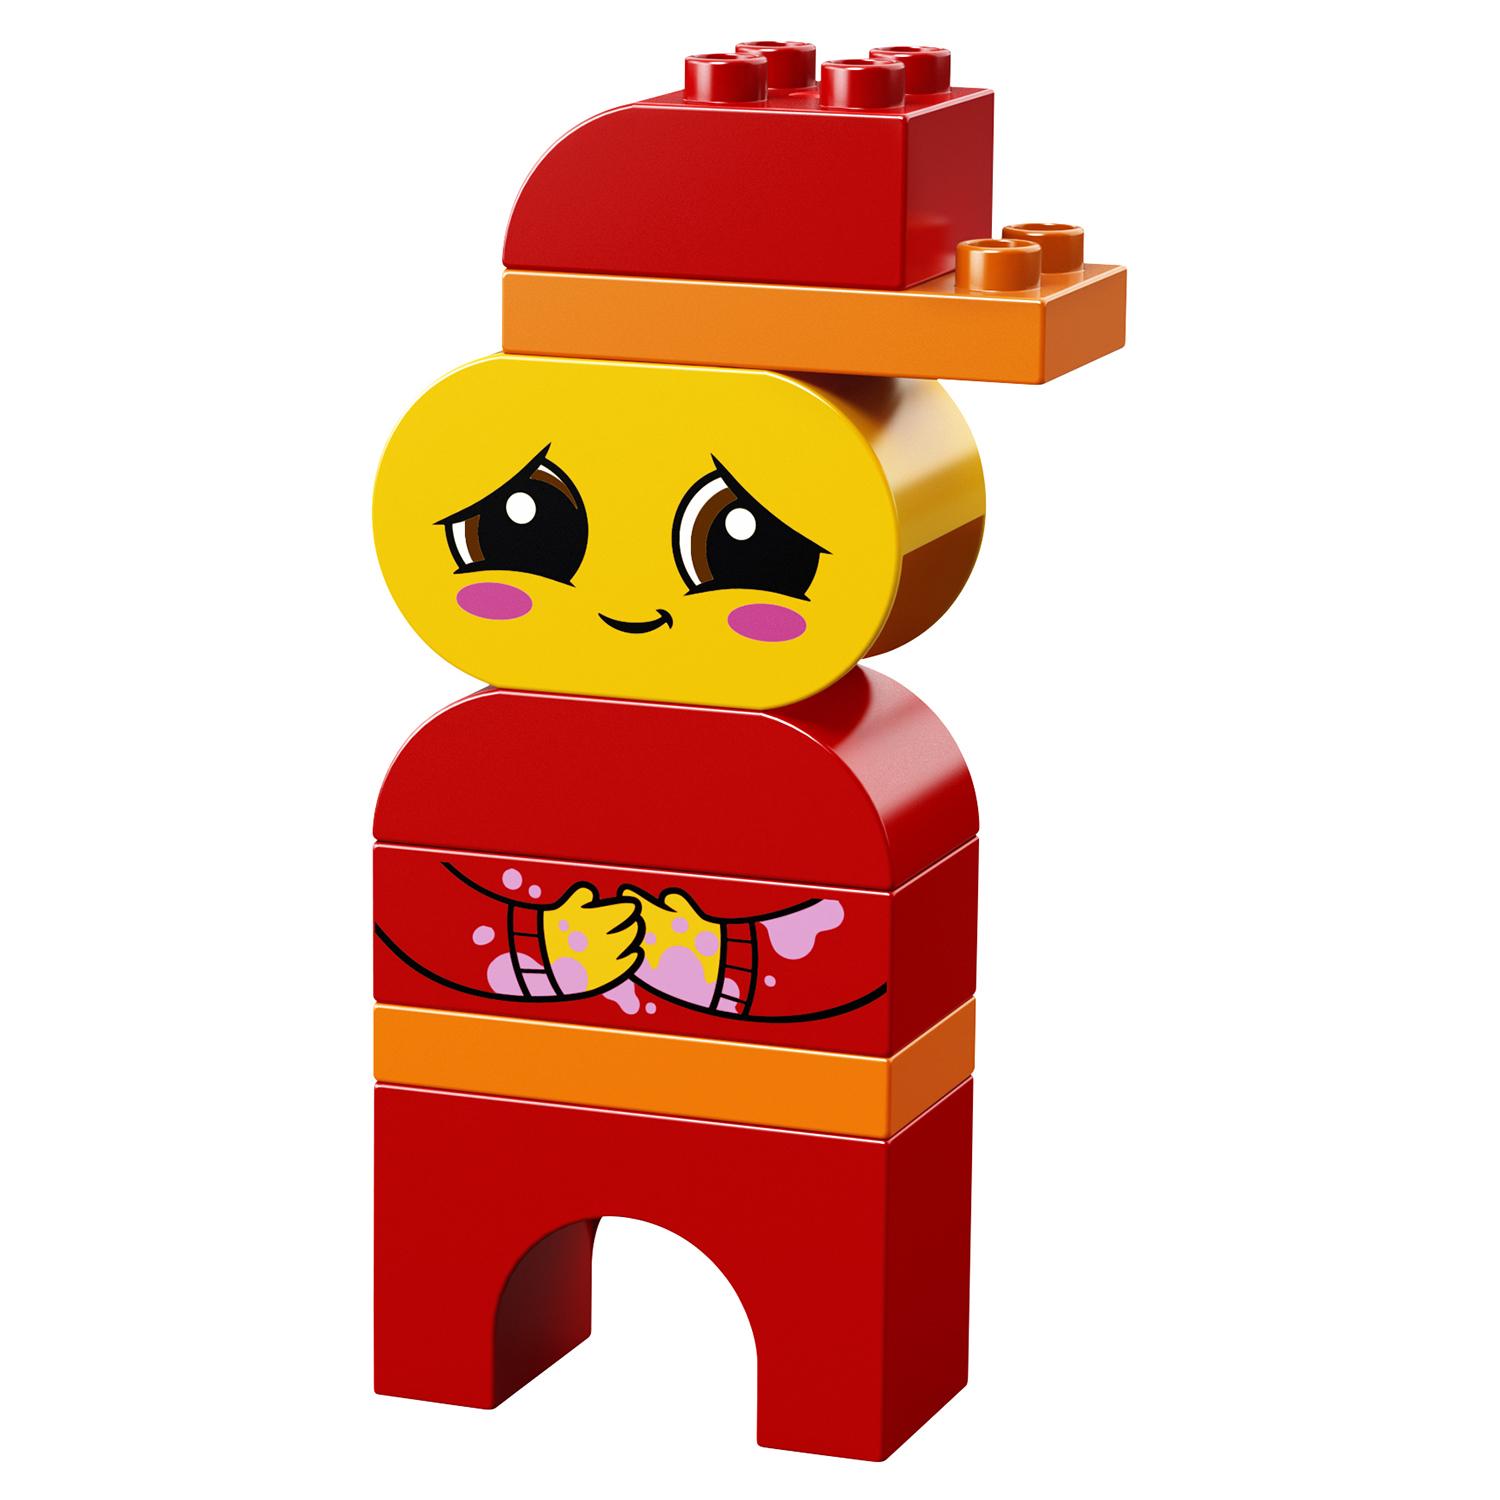 Lego Duplo 10861 Мои первые эмоции